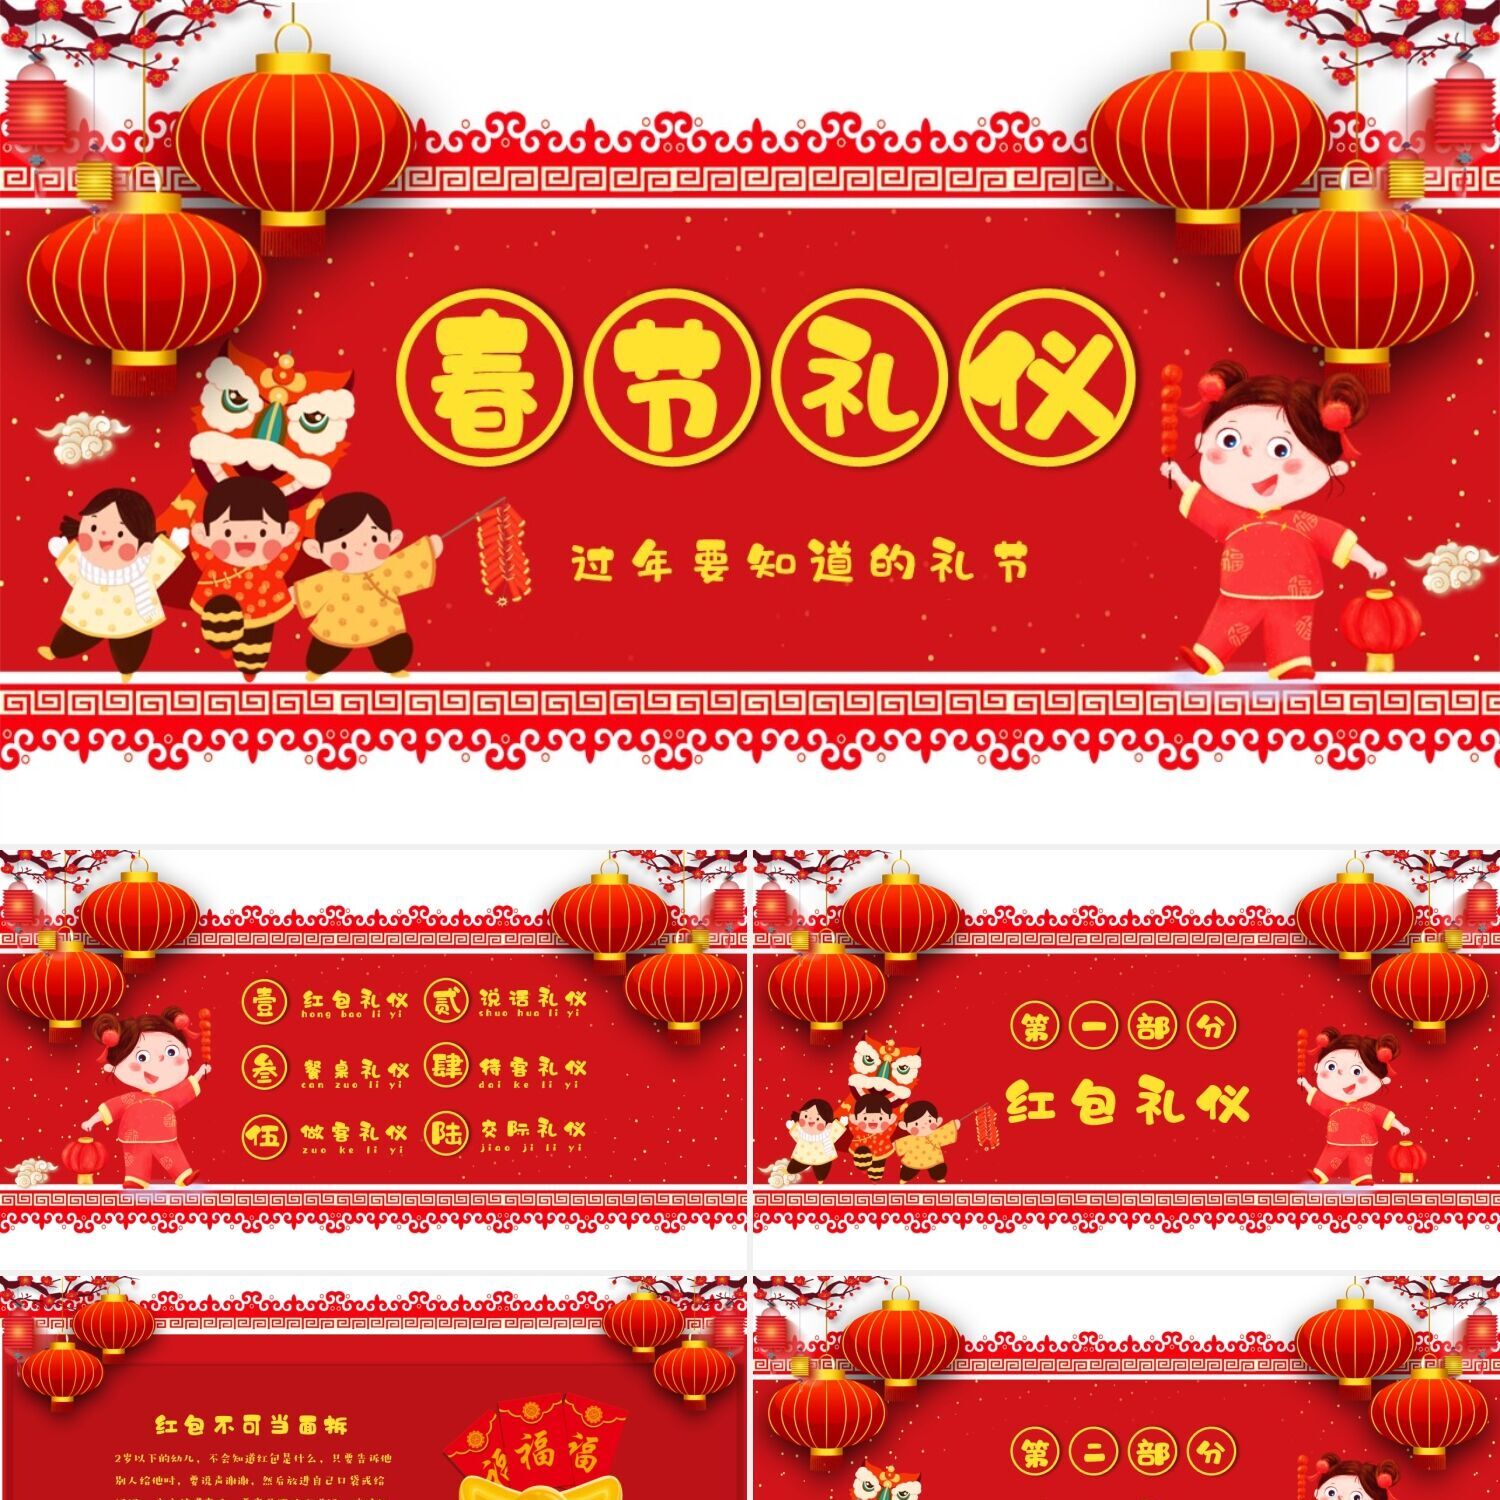 PPT制作红色喜庆传统节日春节礼仪知识介绍PPT模板